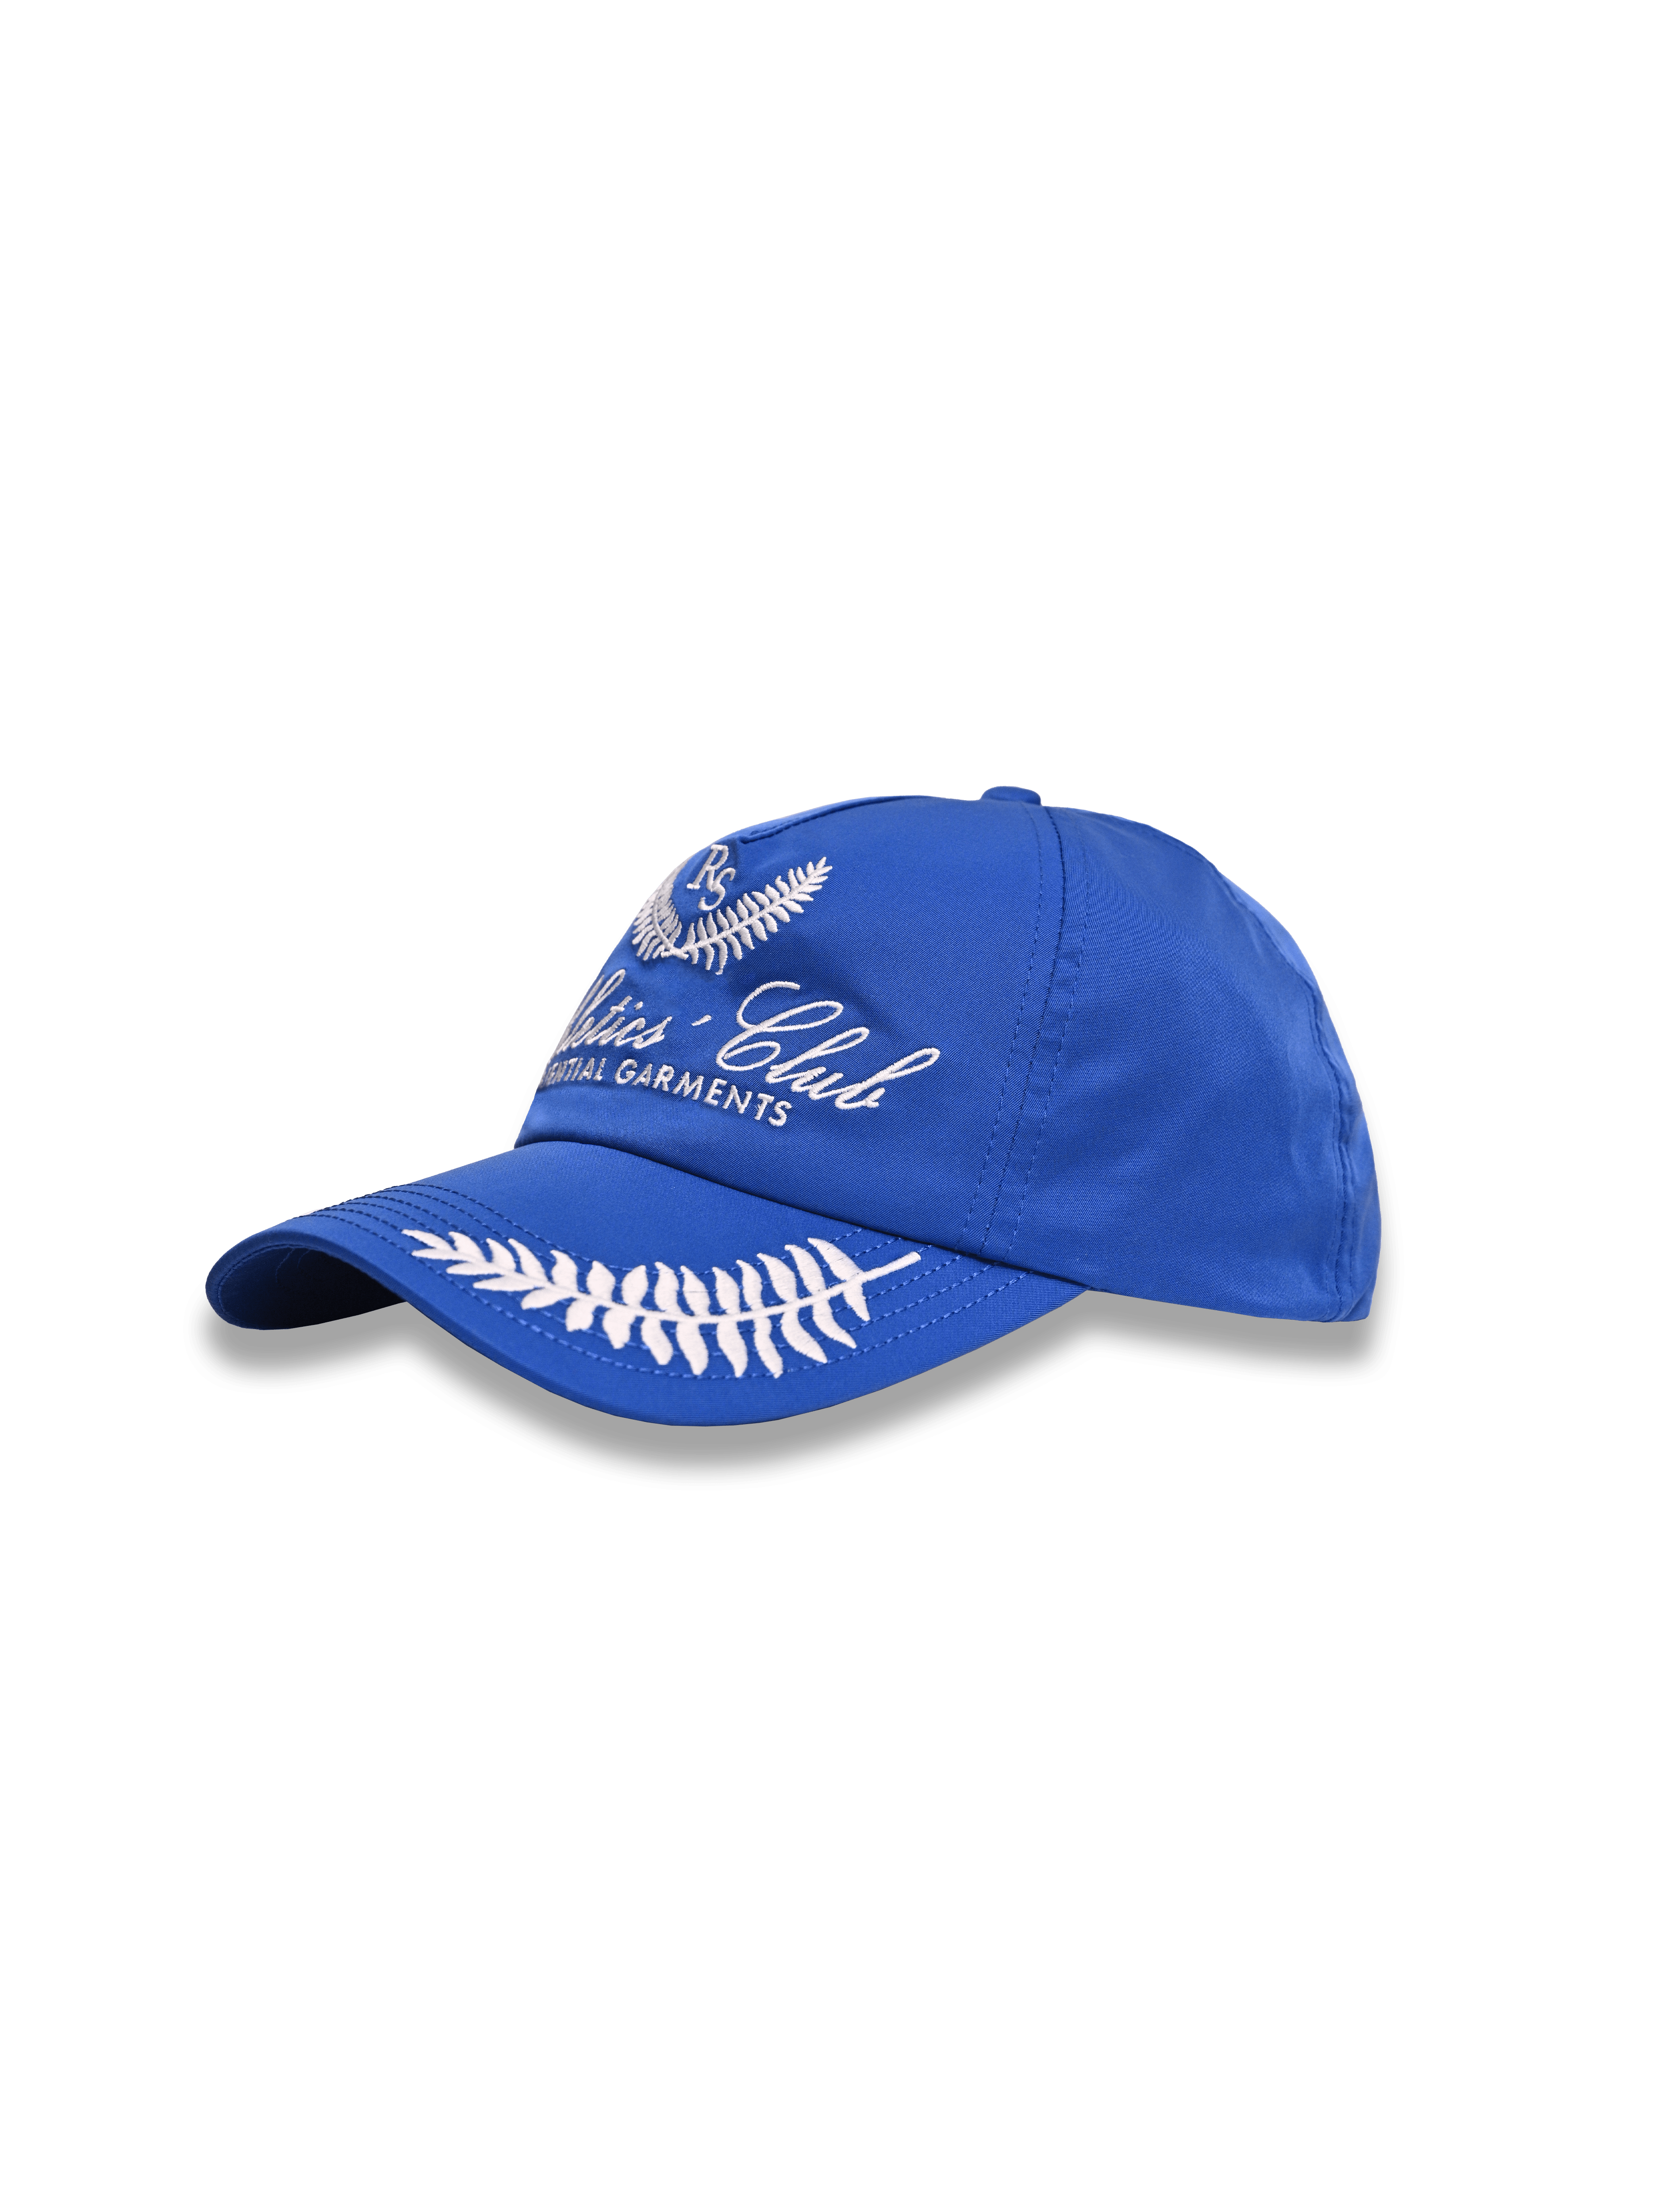 Athletic's Club Cap - Royal Blue